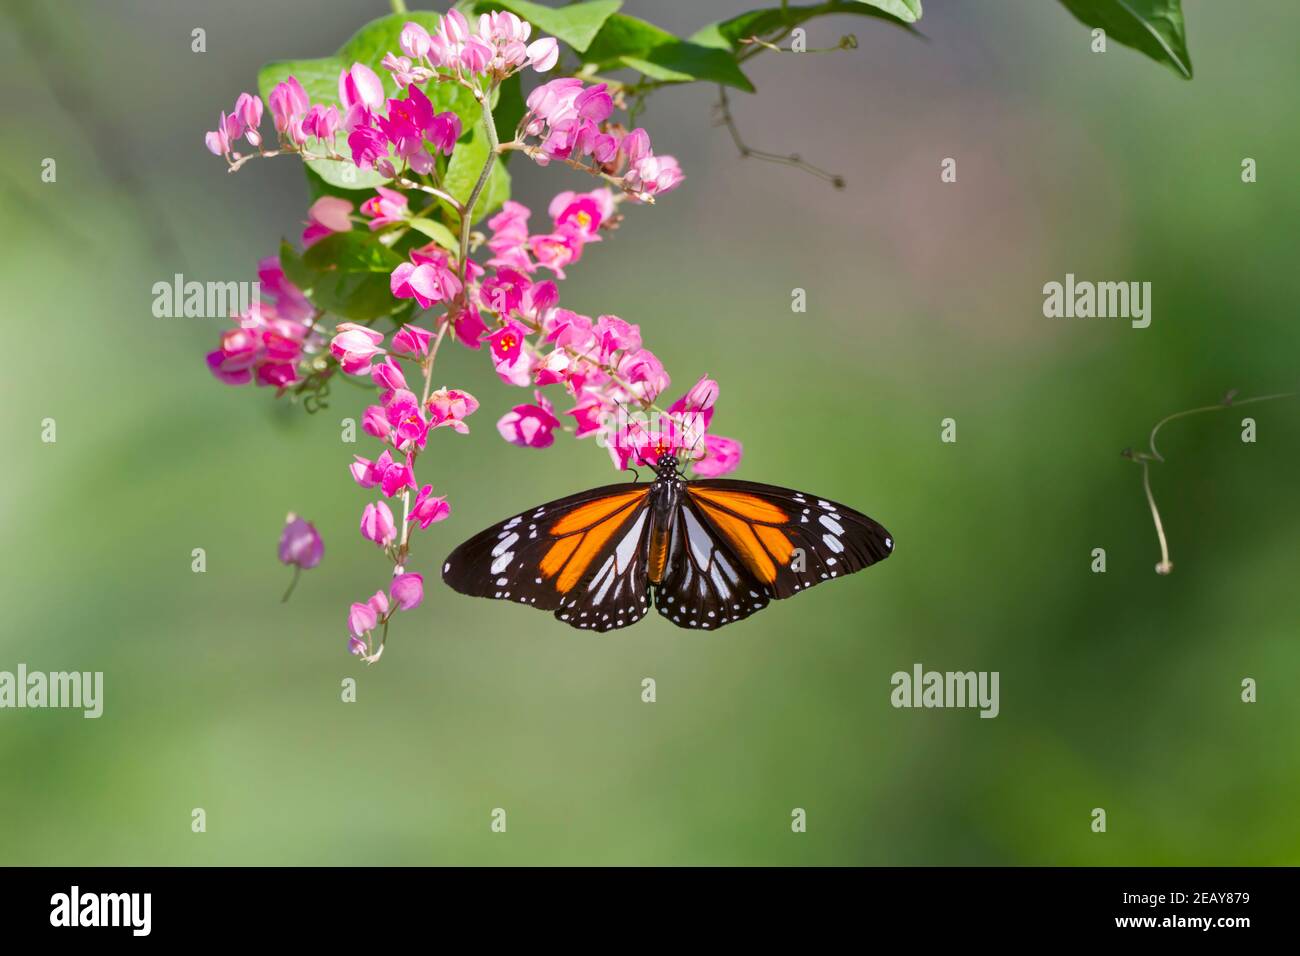 Black Veined Tiger Butterfly, Danaus melanippus hegesippus on Coral Vine, Antigonon leptopus Stock Photo